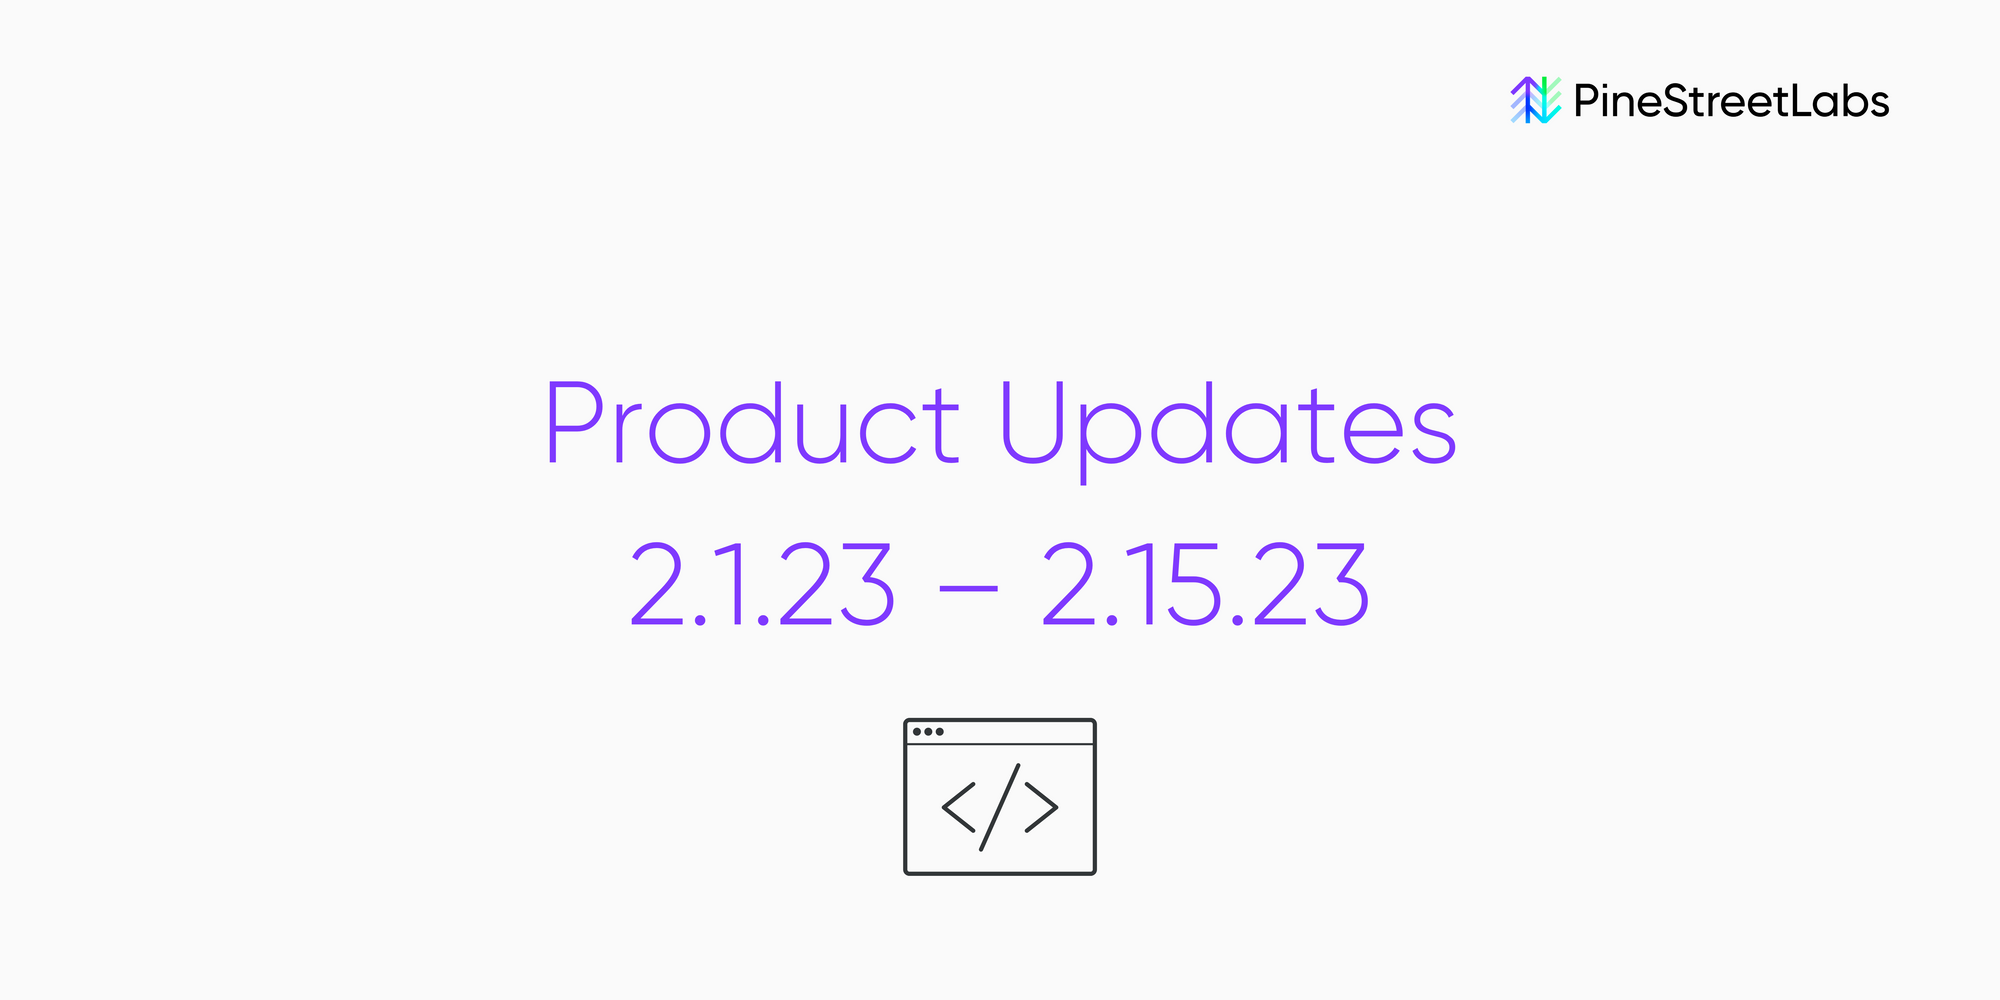 Product Updates: 2/1/23 – 2/15/23